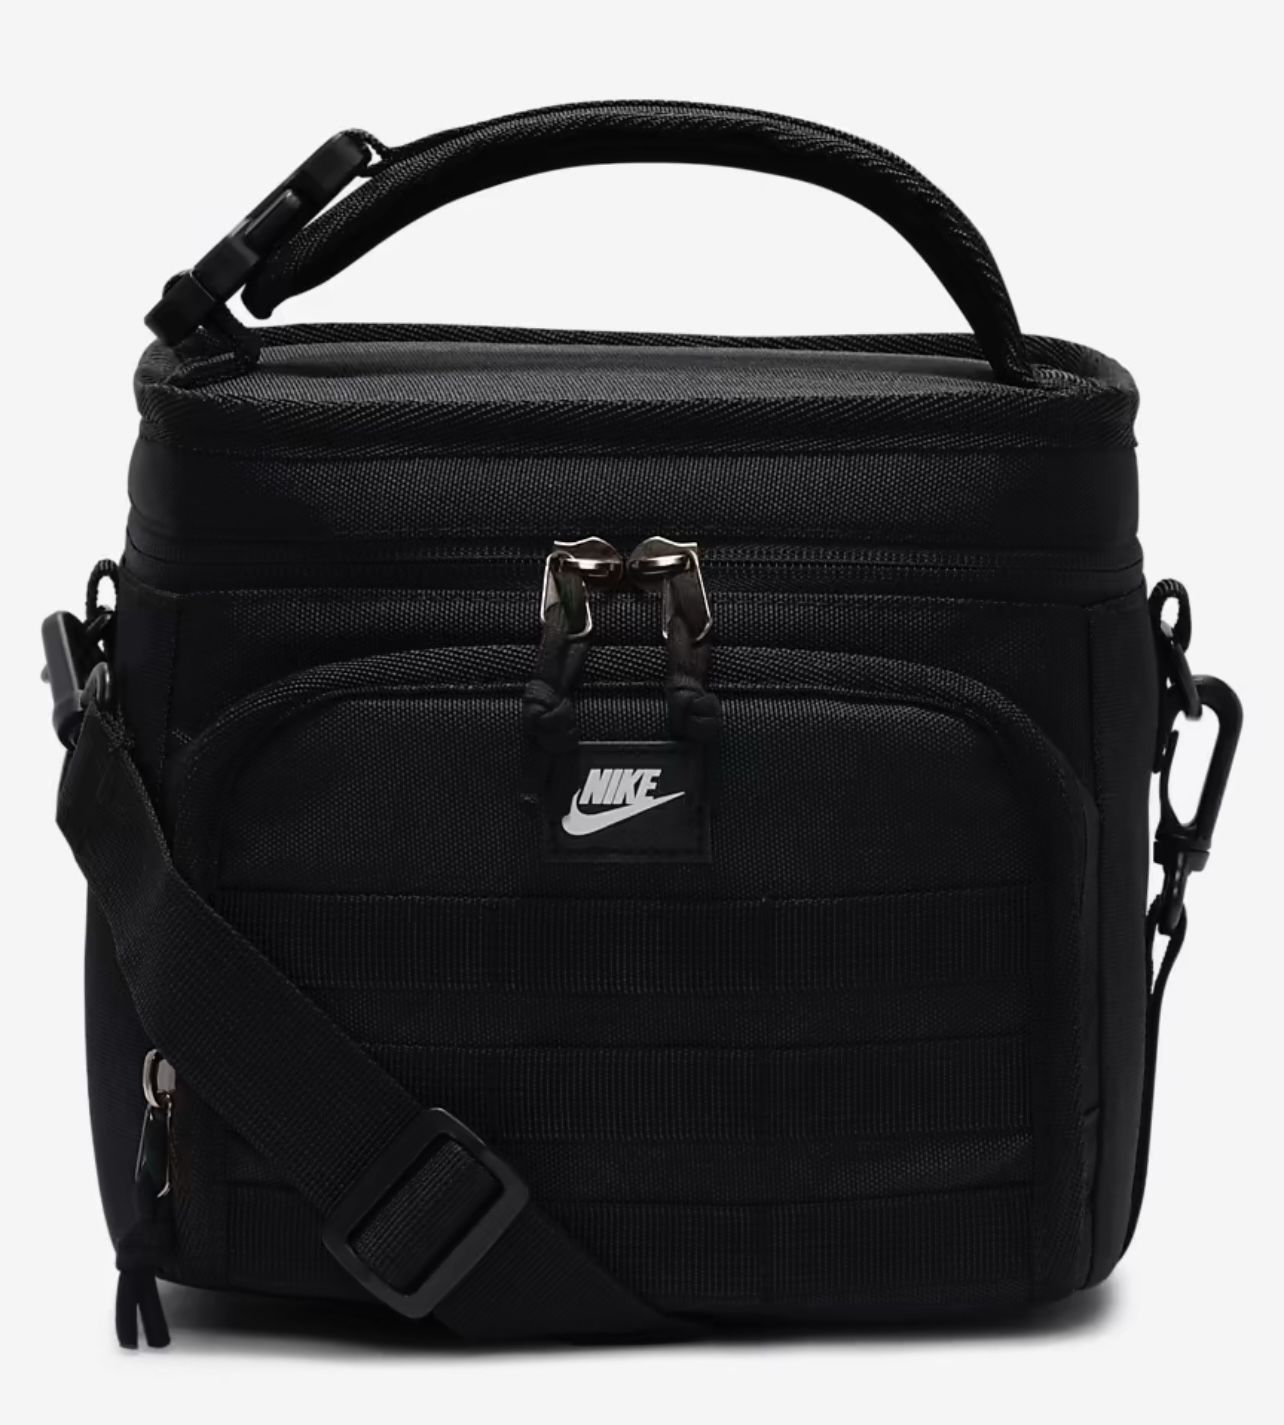 Nike Lunch Bag Black 